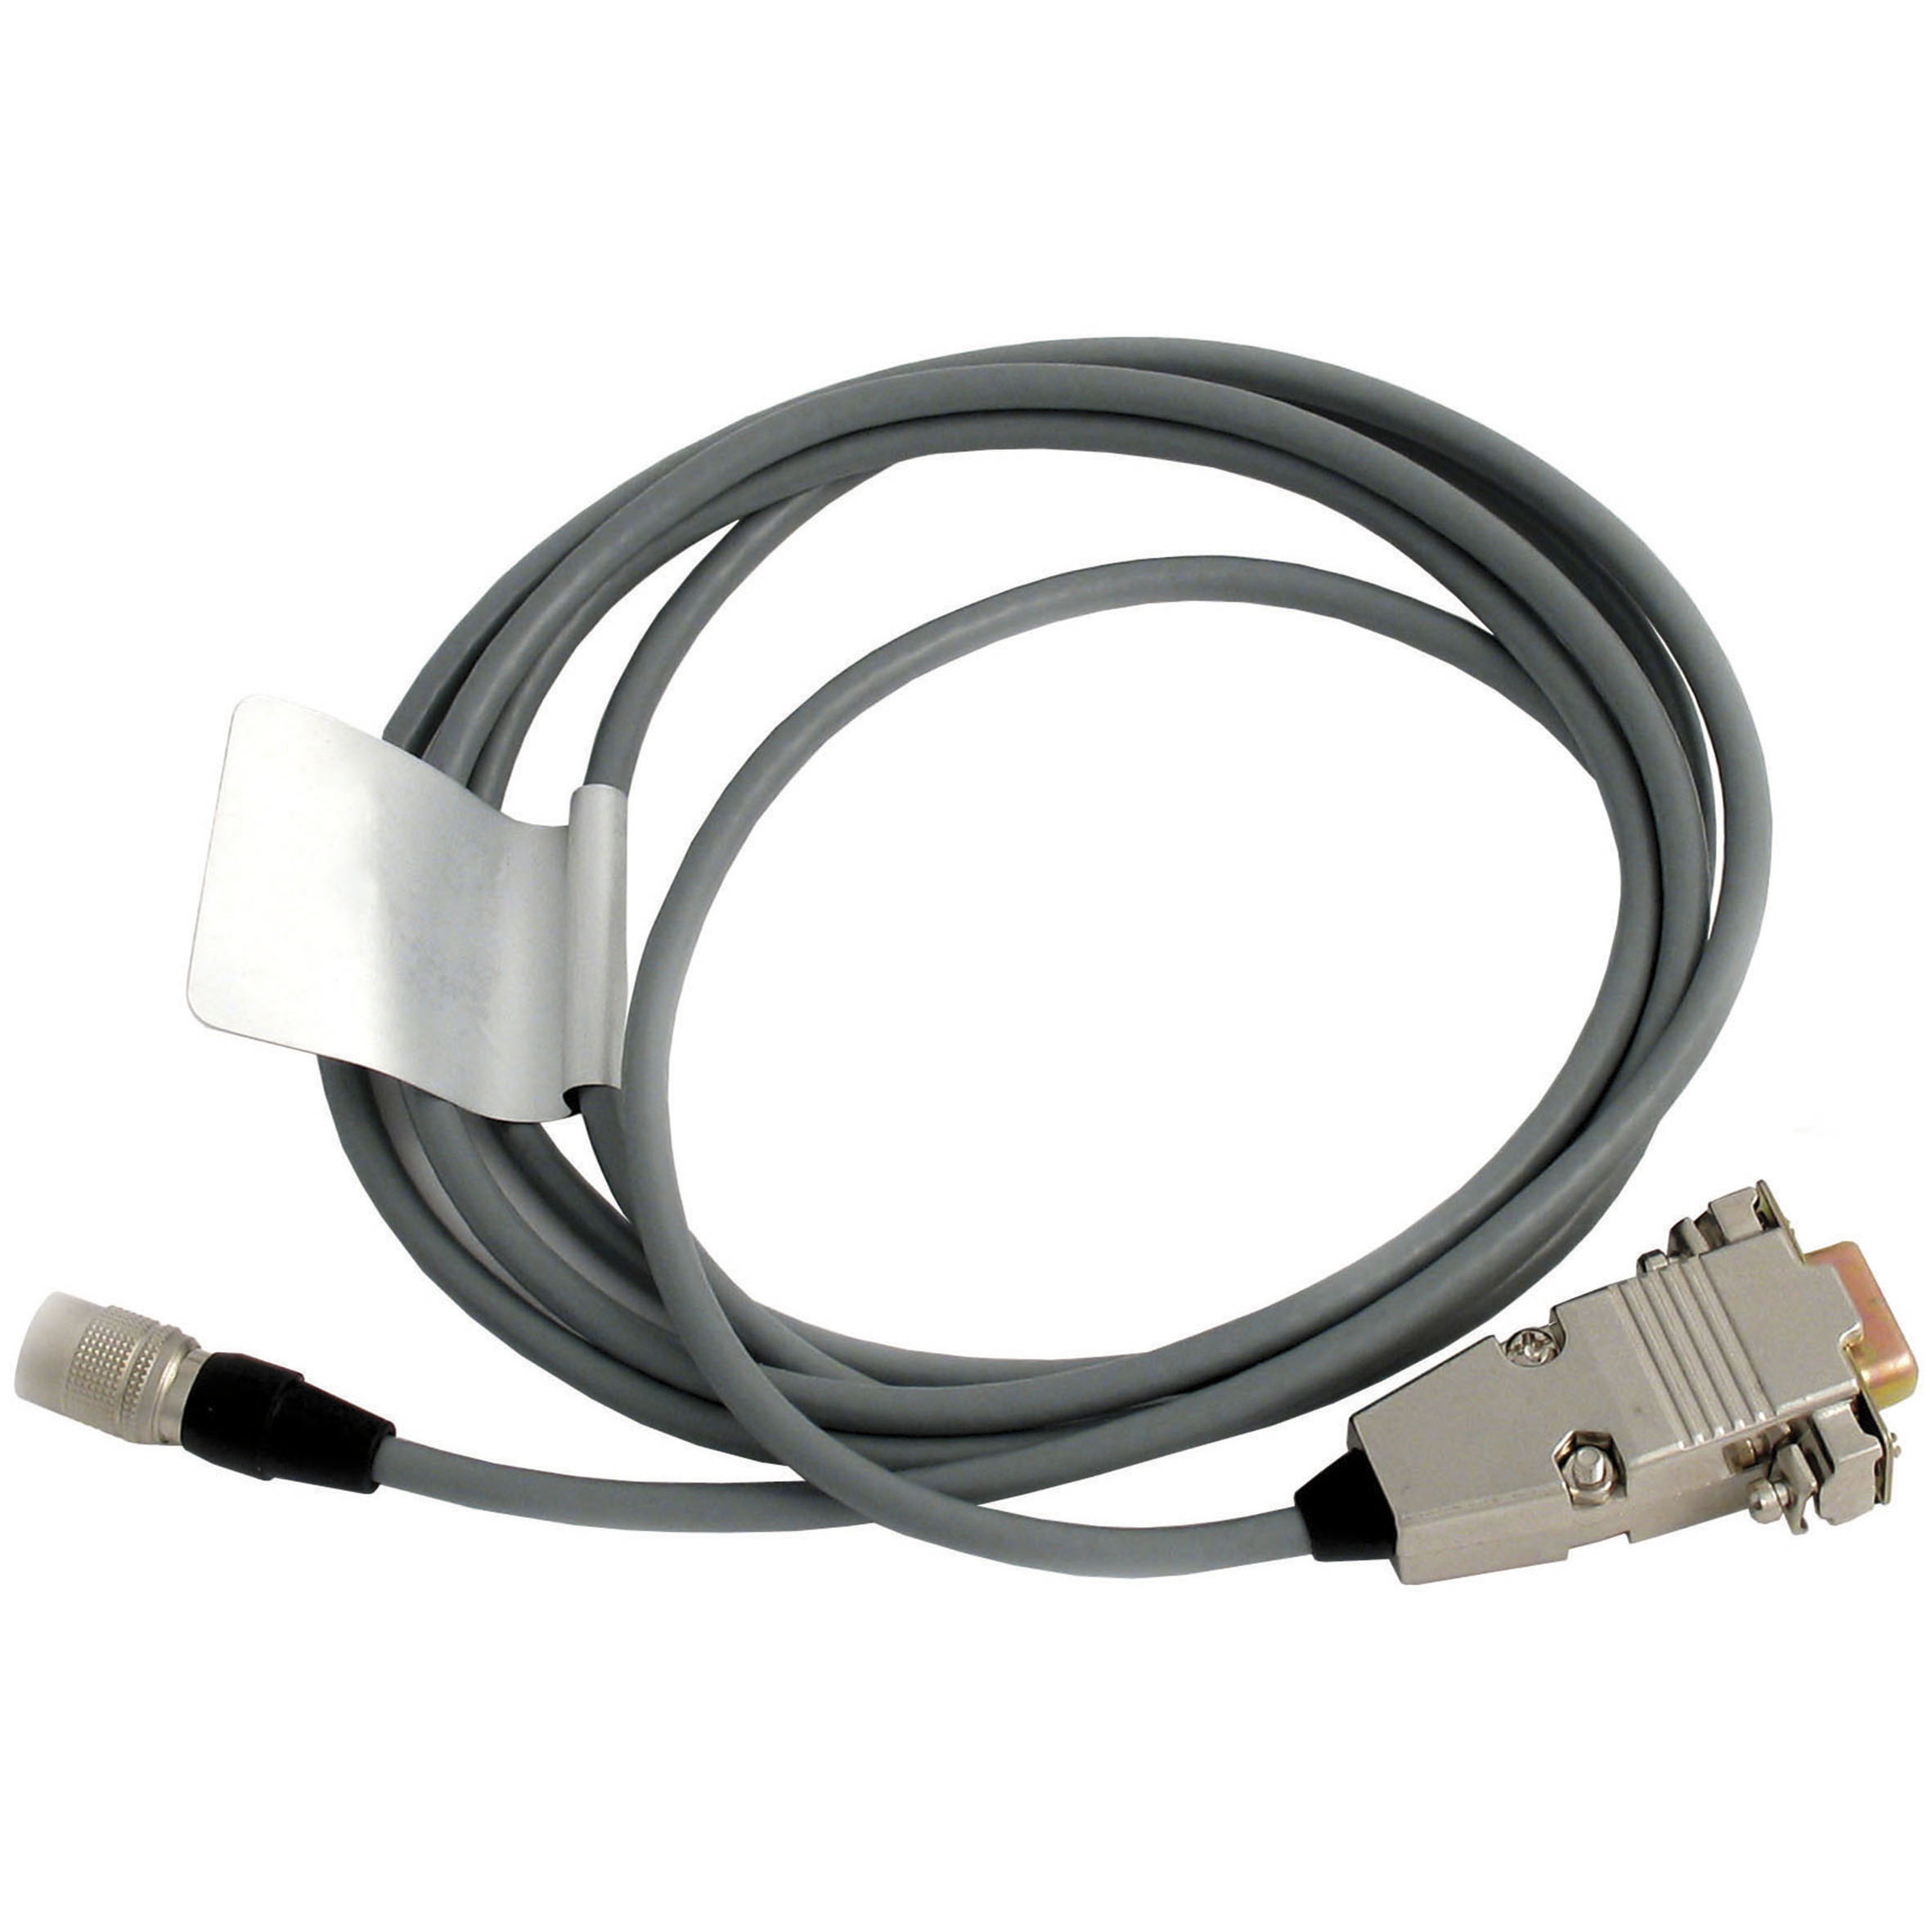 Cable p/datos torquim electr